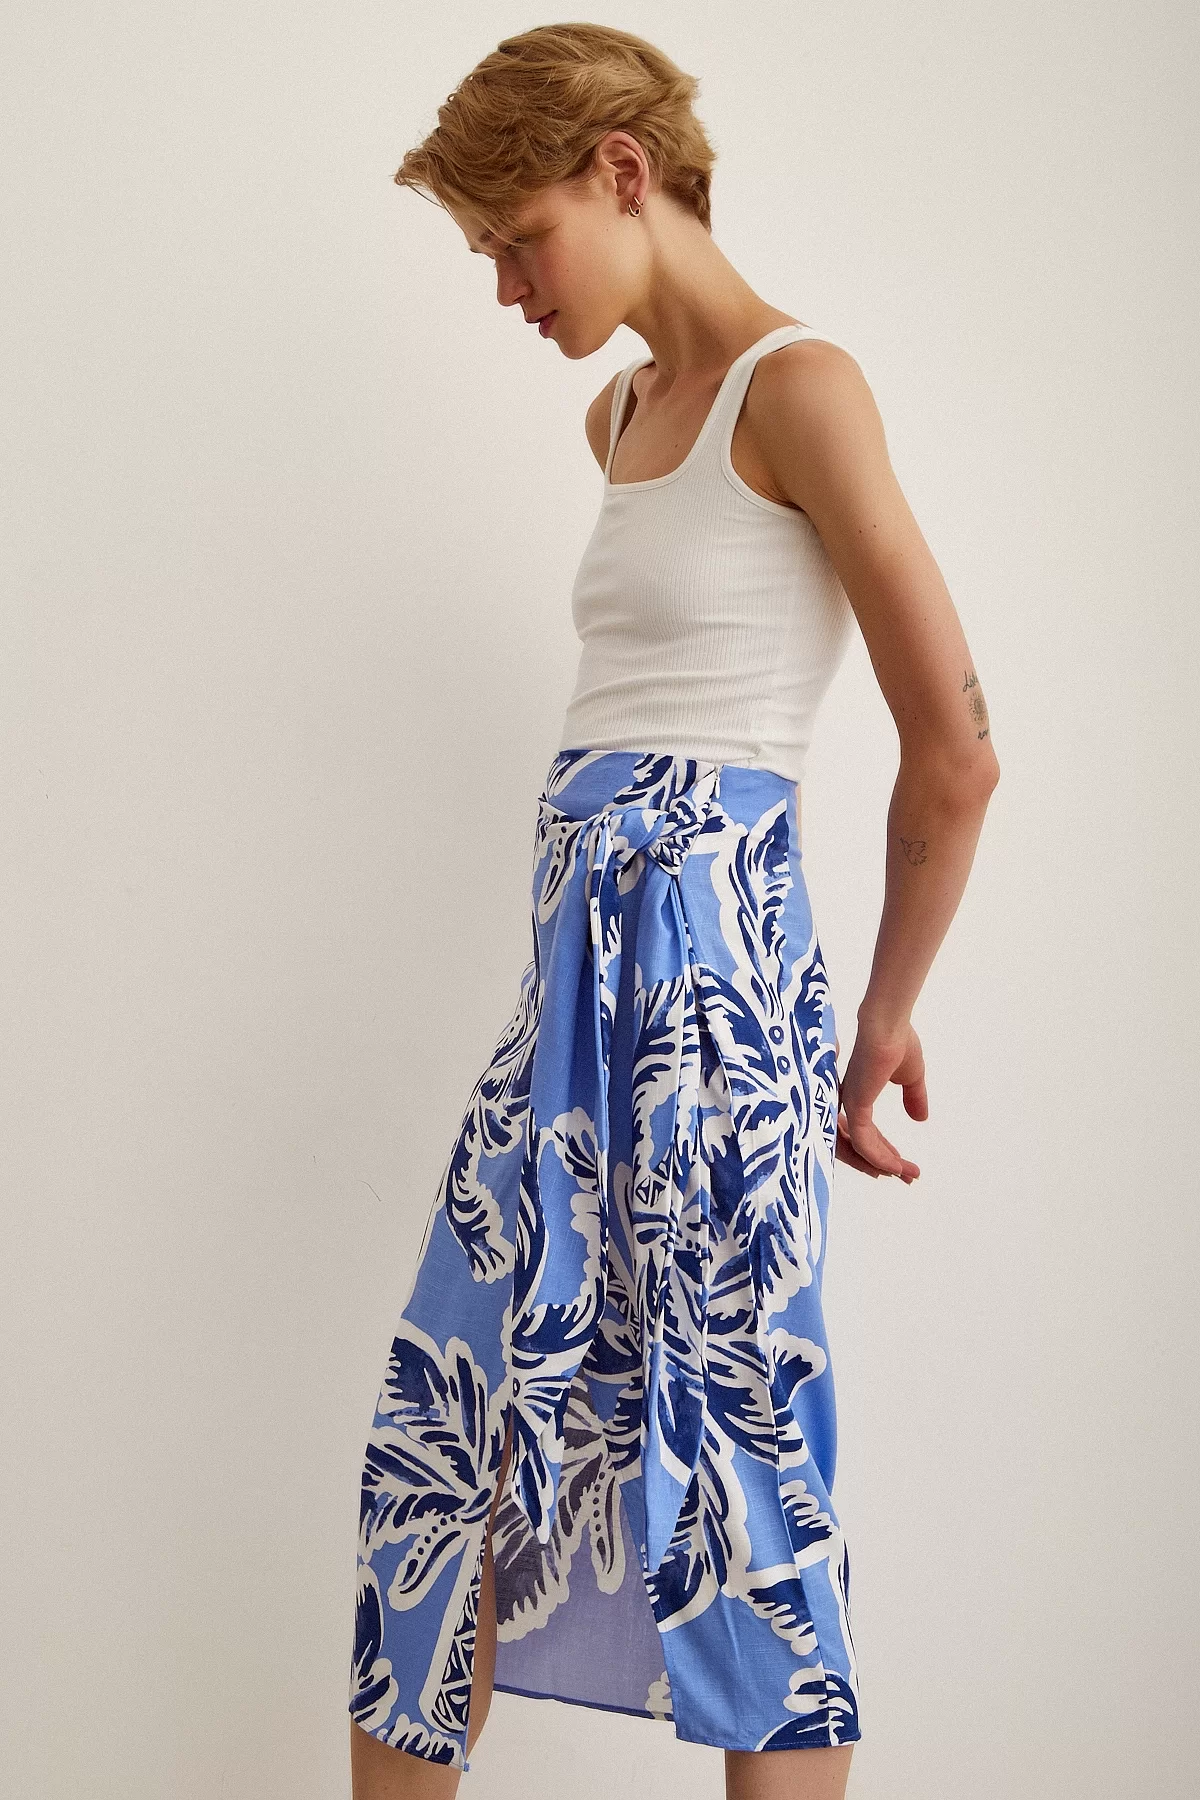 Slit Zebra Print Skirt - Blue Palm Leaf Print